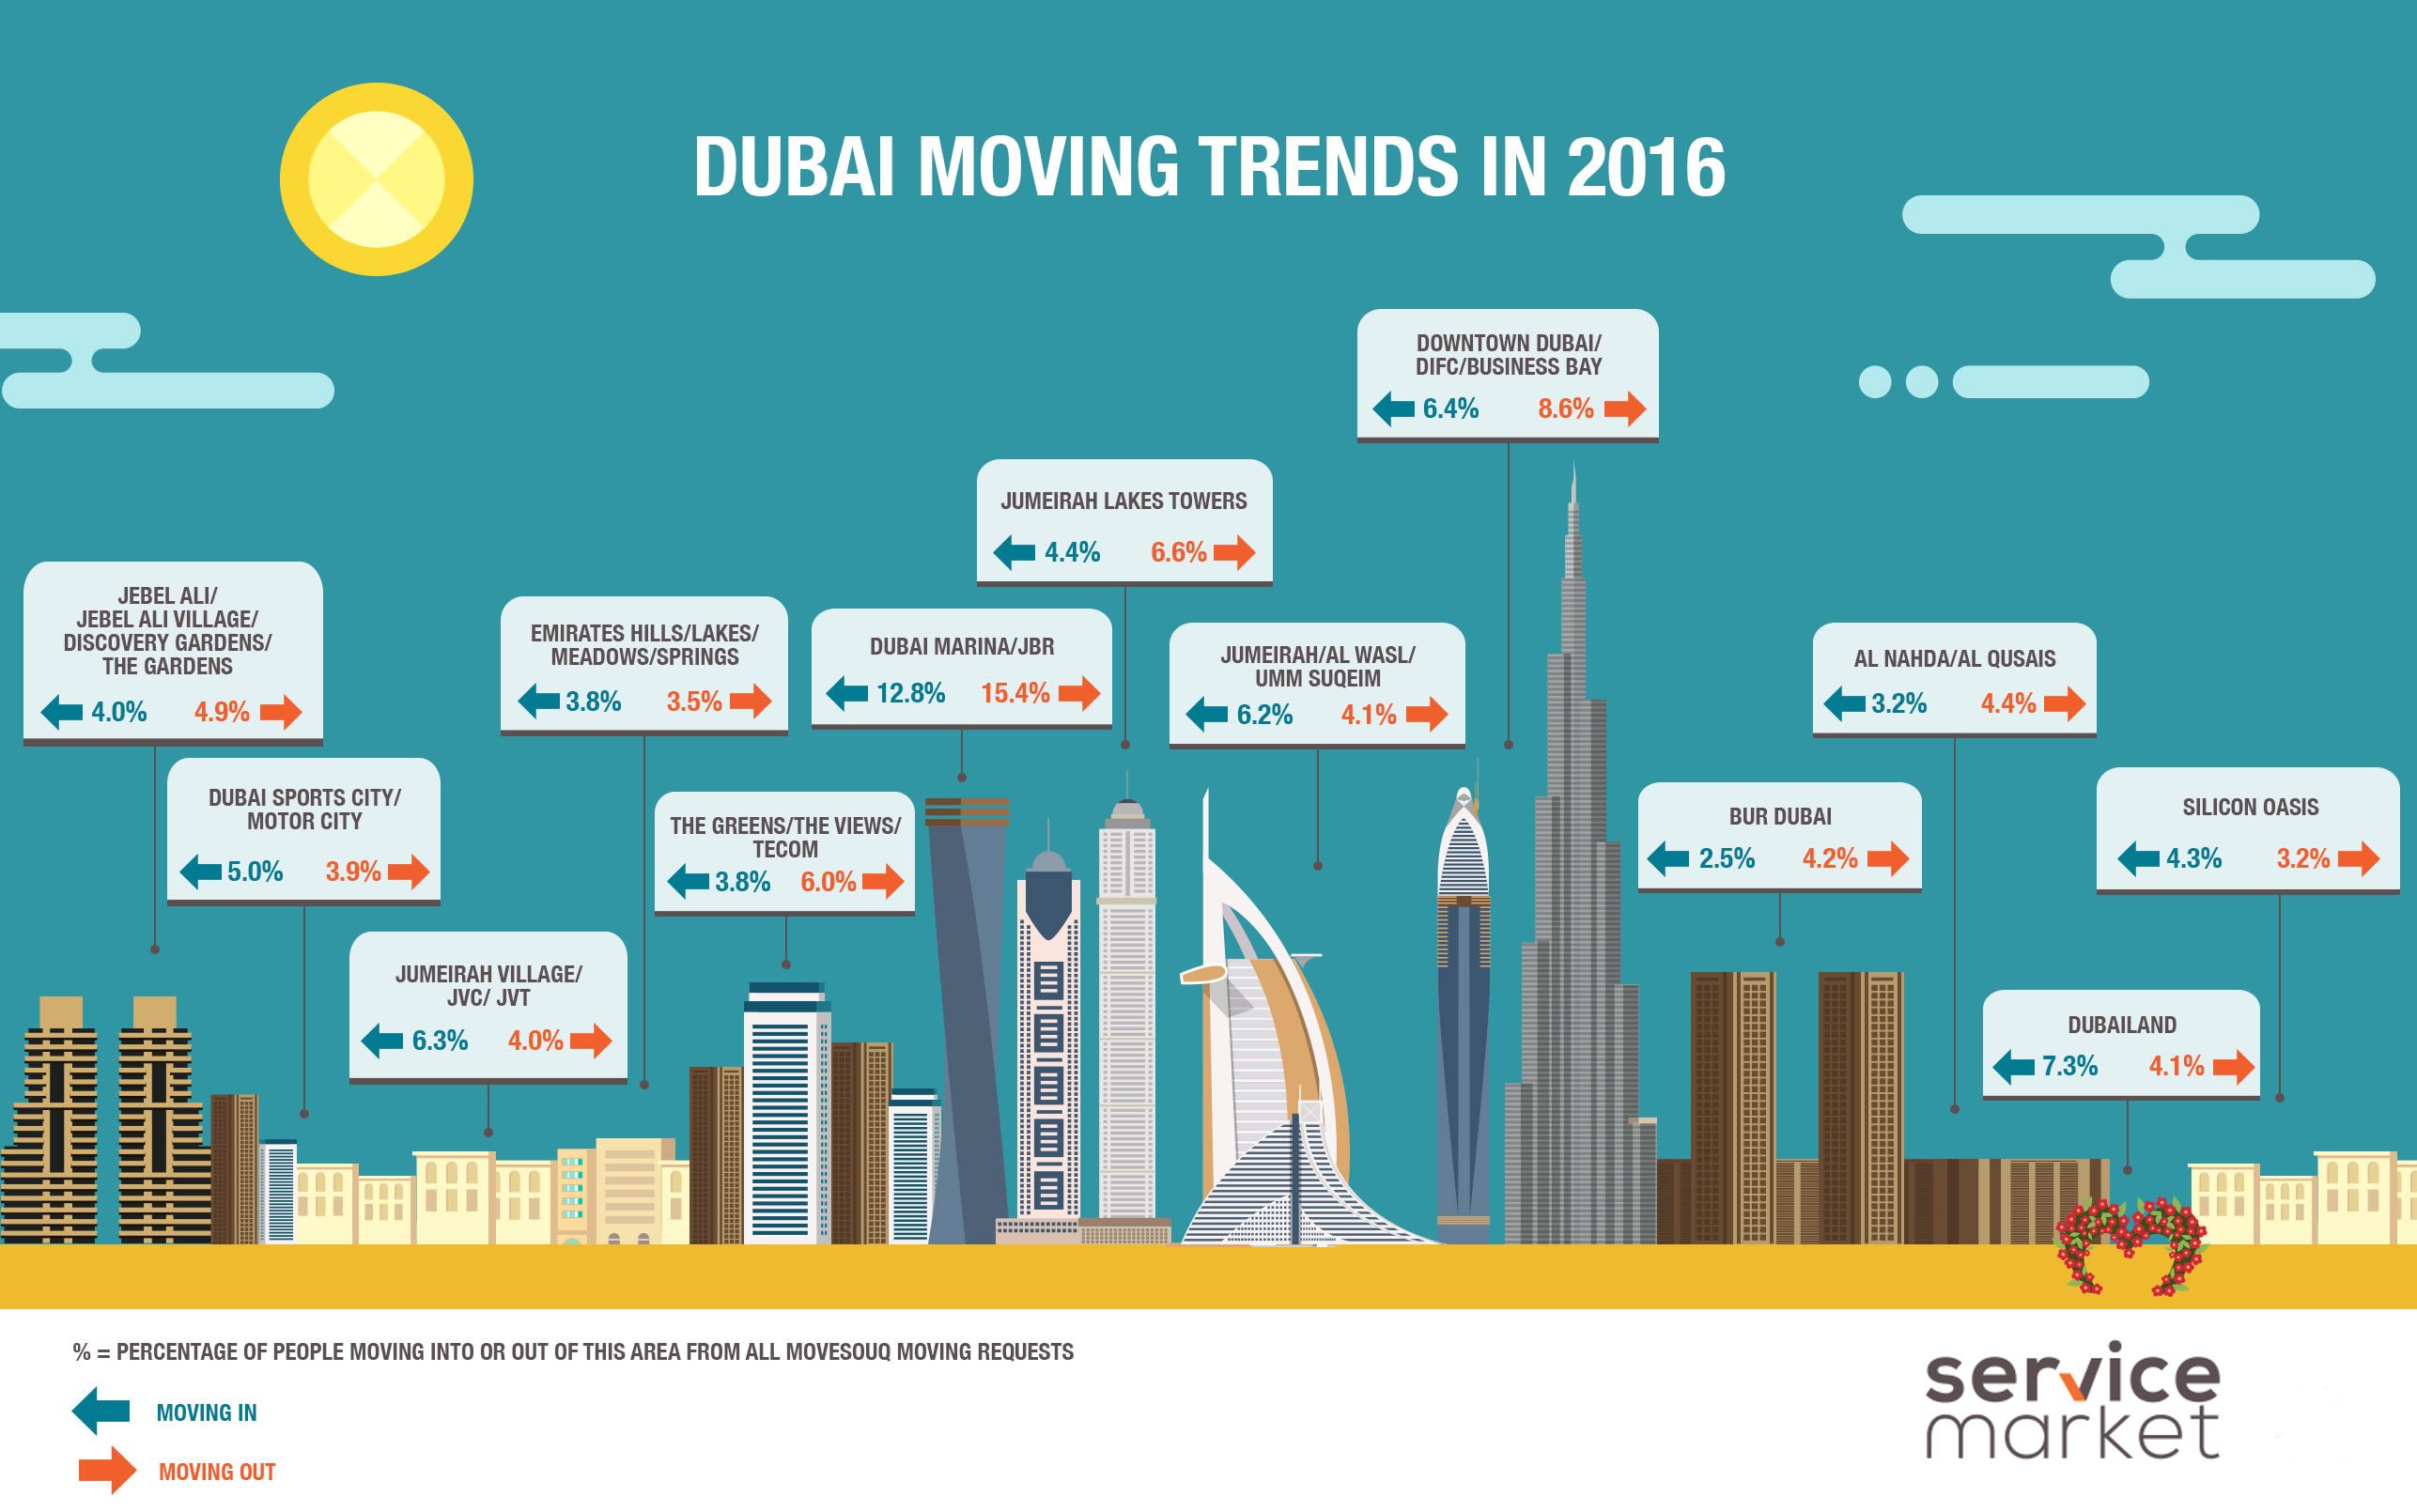 The Most Popular Areas in Dubai in 2016